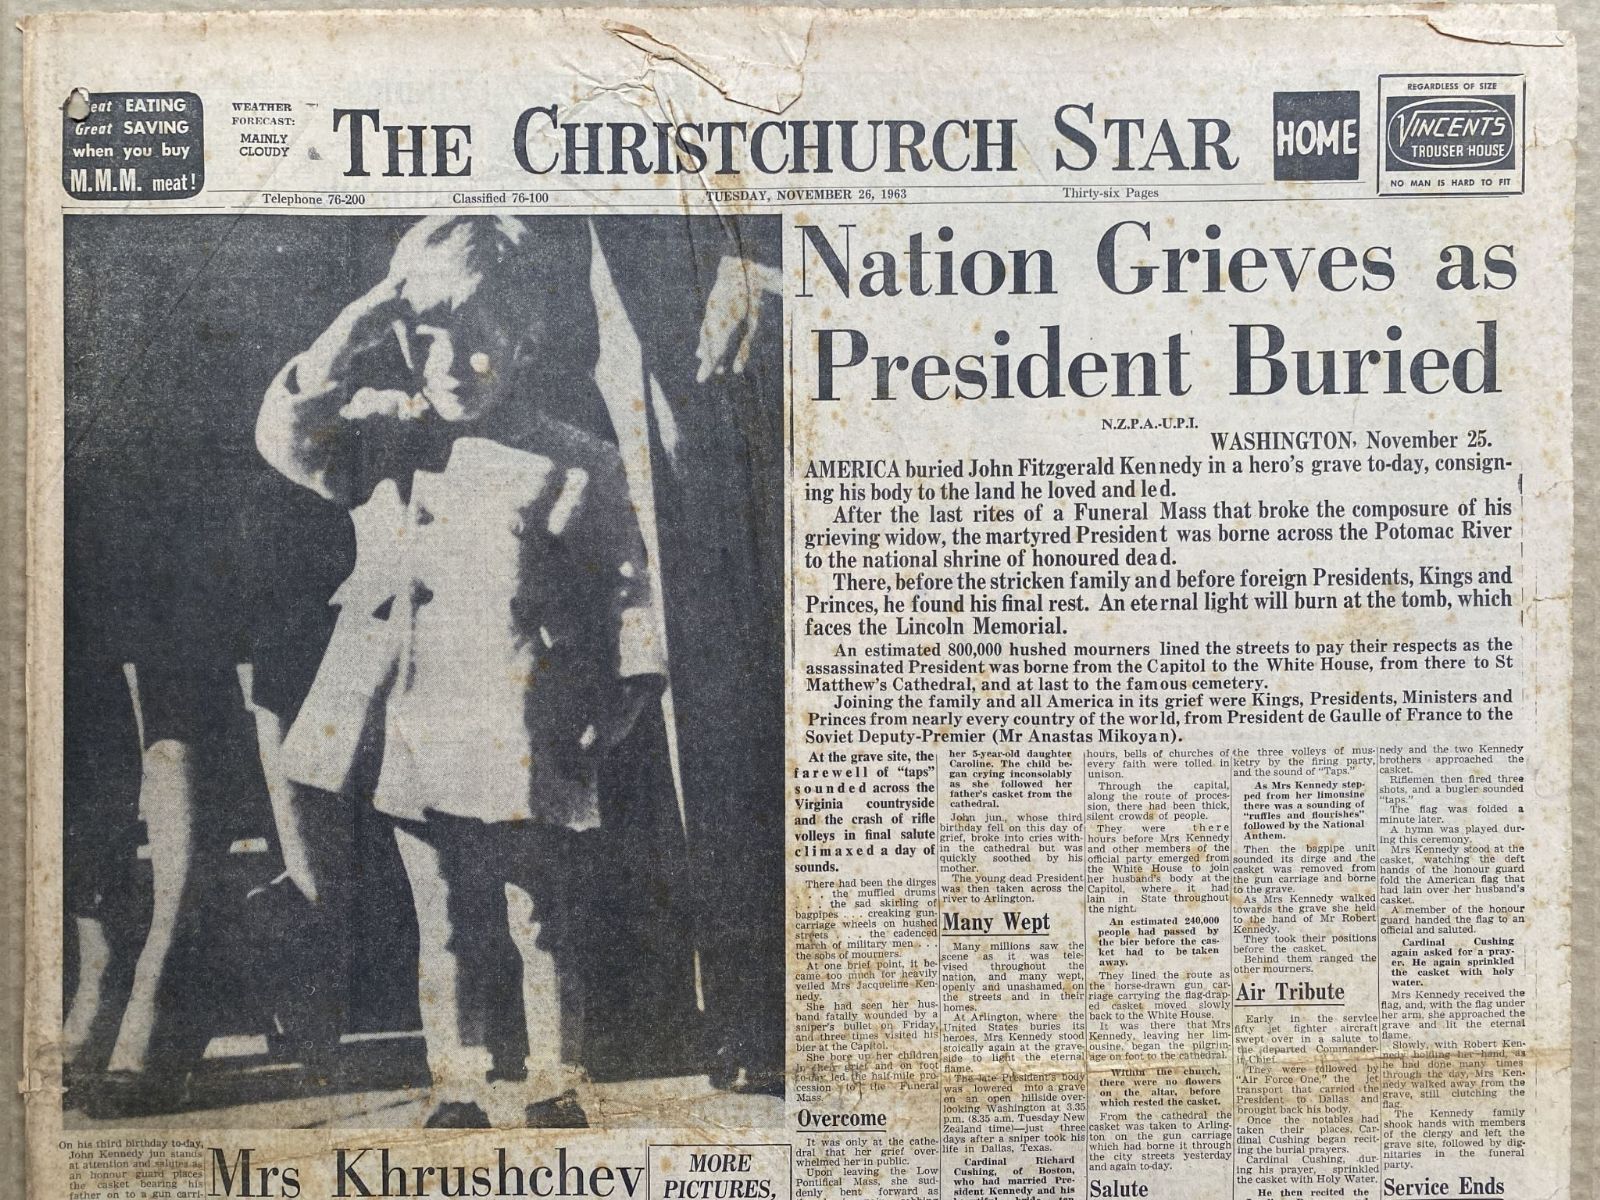 OLD NEWSPAPER: The Christchurch Star, 26 November 1963 - JFK Assassination